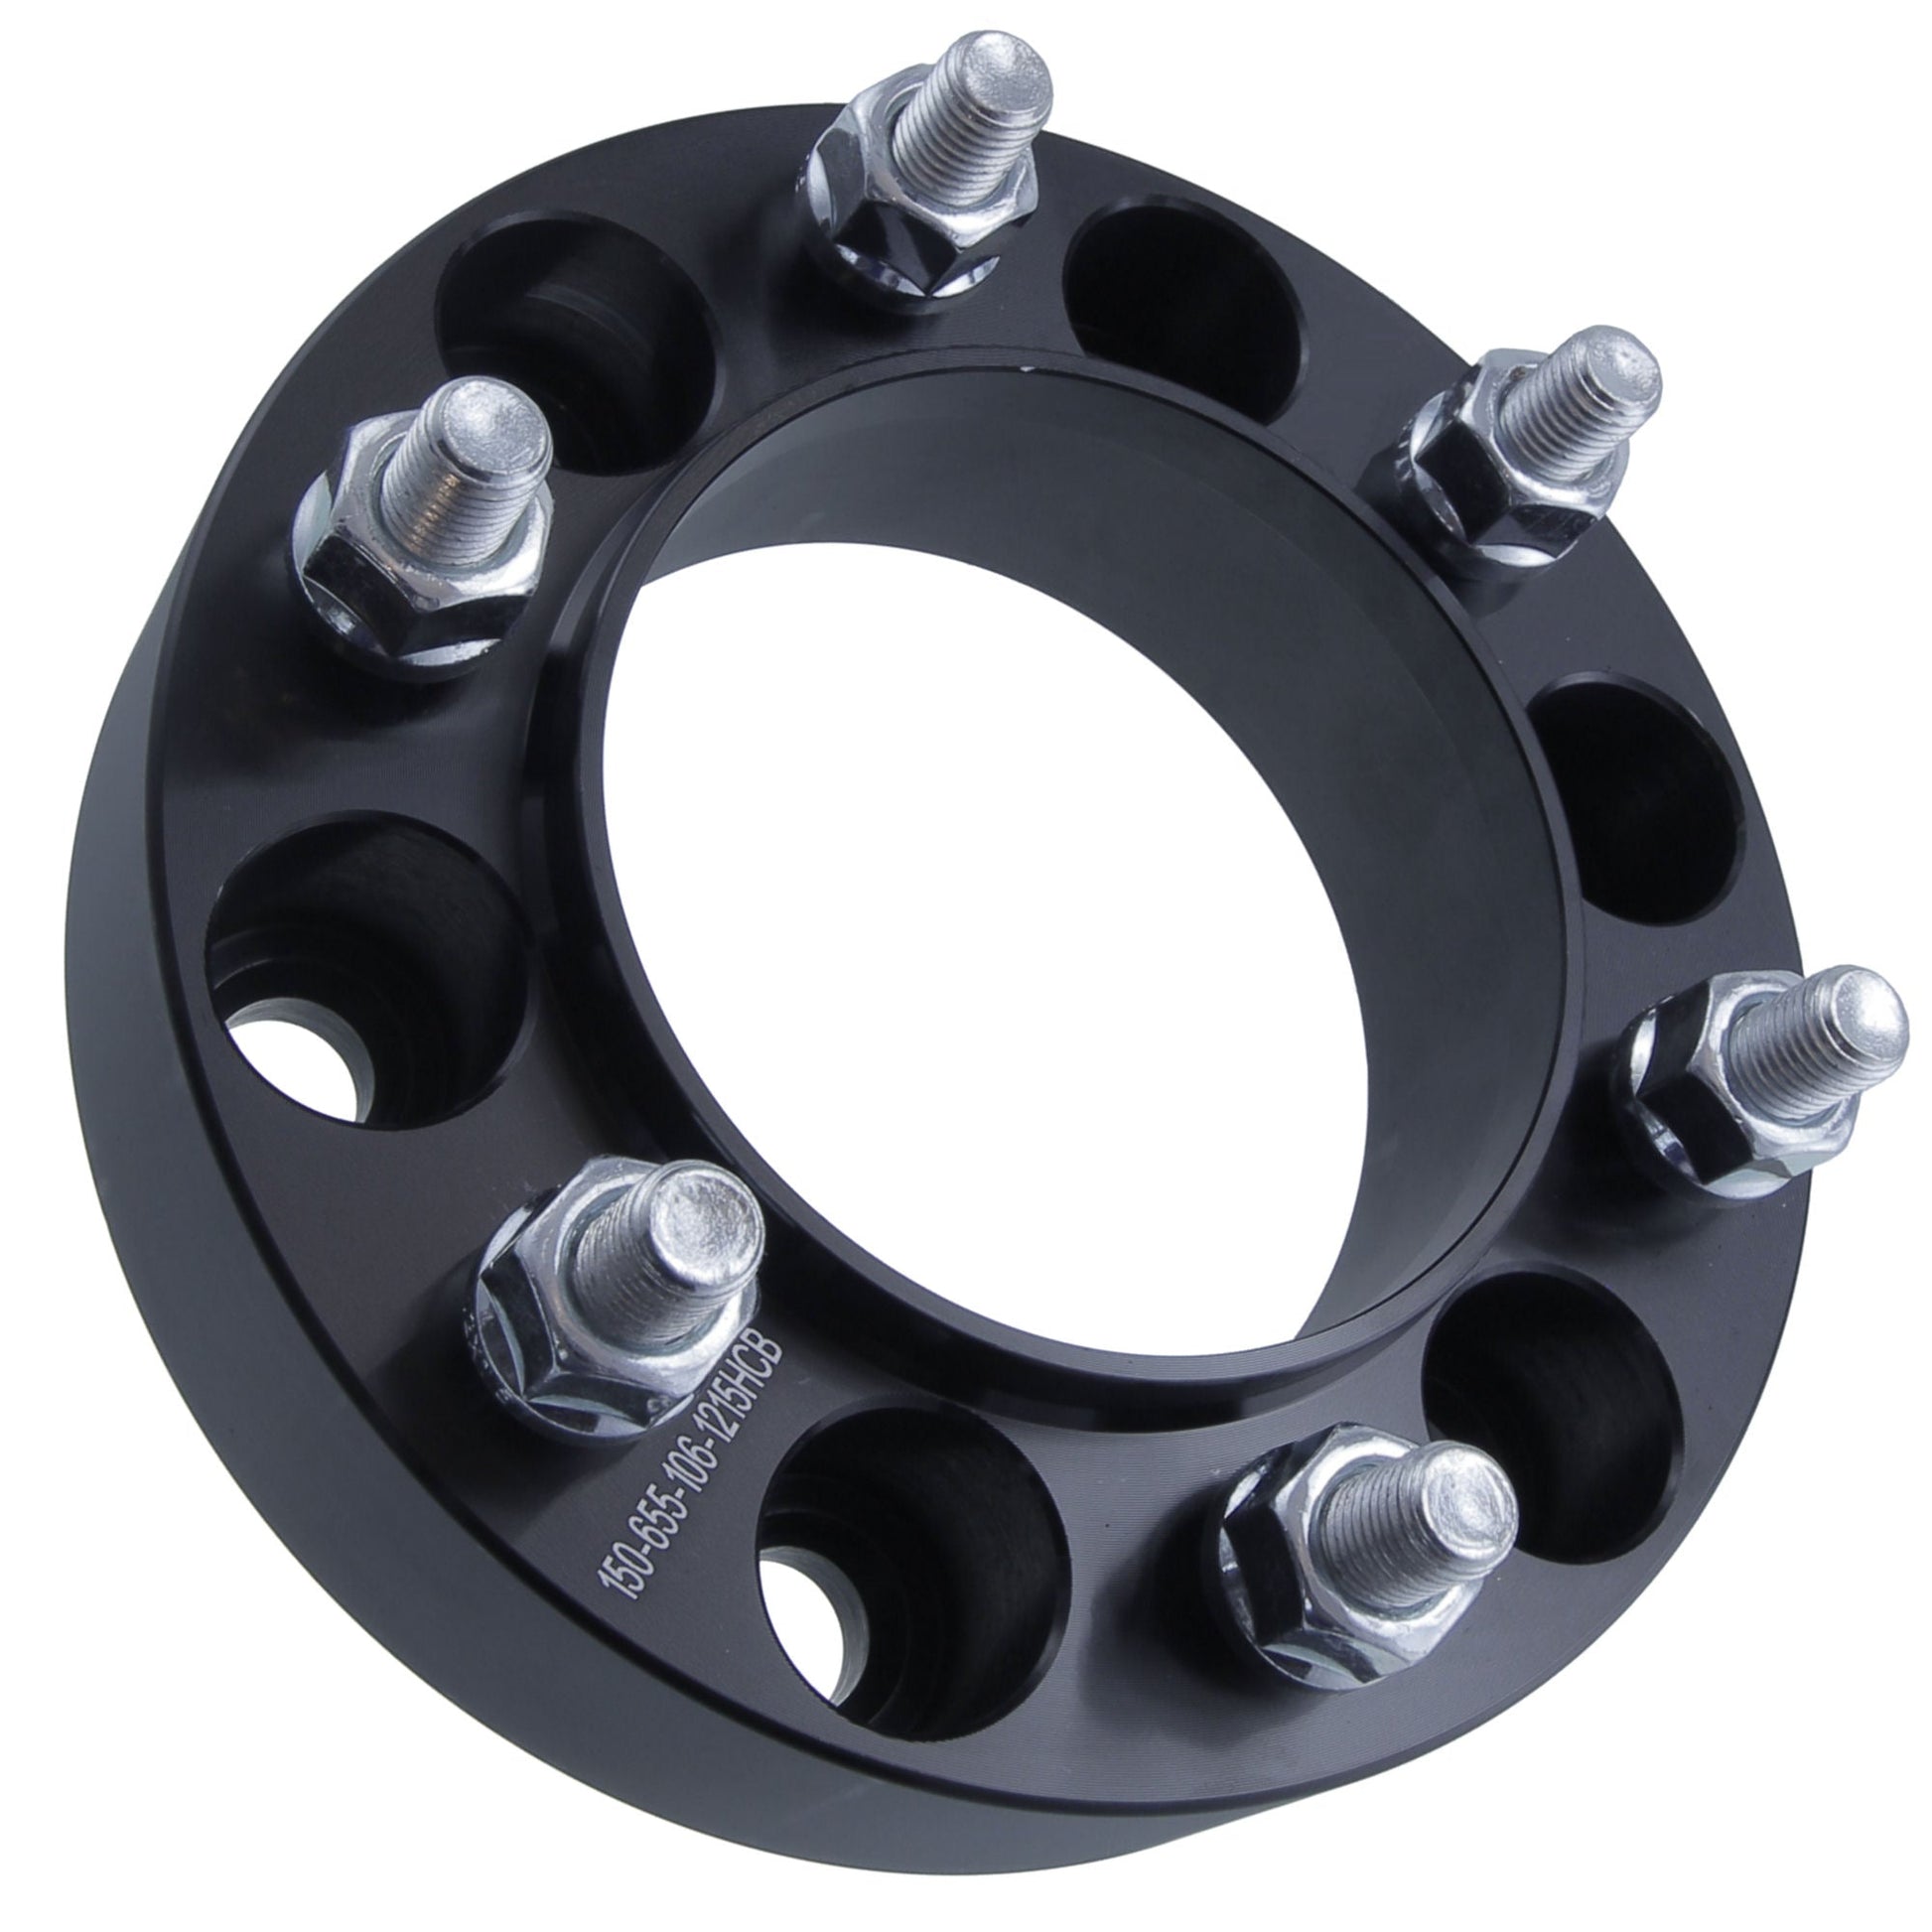 1.5" (38mm) Titan Wheel Spacers for Isuzu Rodeo Troopter Toyota 4 Runner FJ Cruiser | 6x5.5 (6x139.7) | 106 Hubcentric |12x1.5 Studs | Titan Wheel Accessories